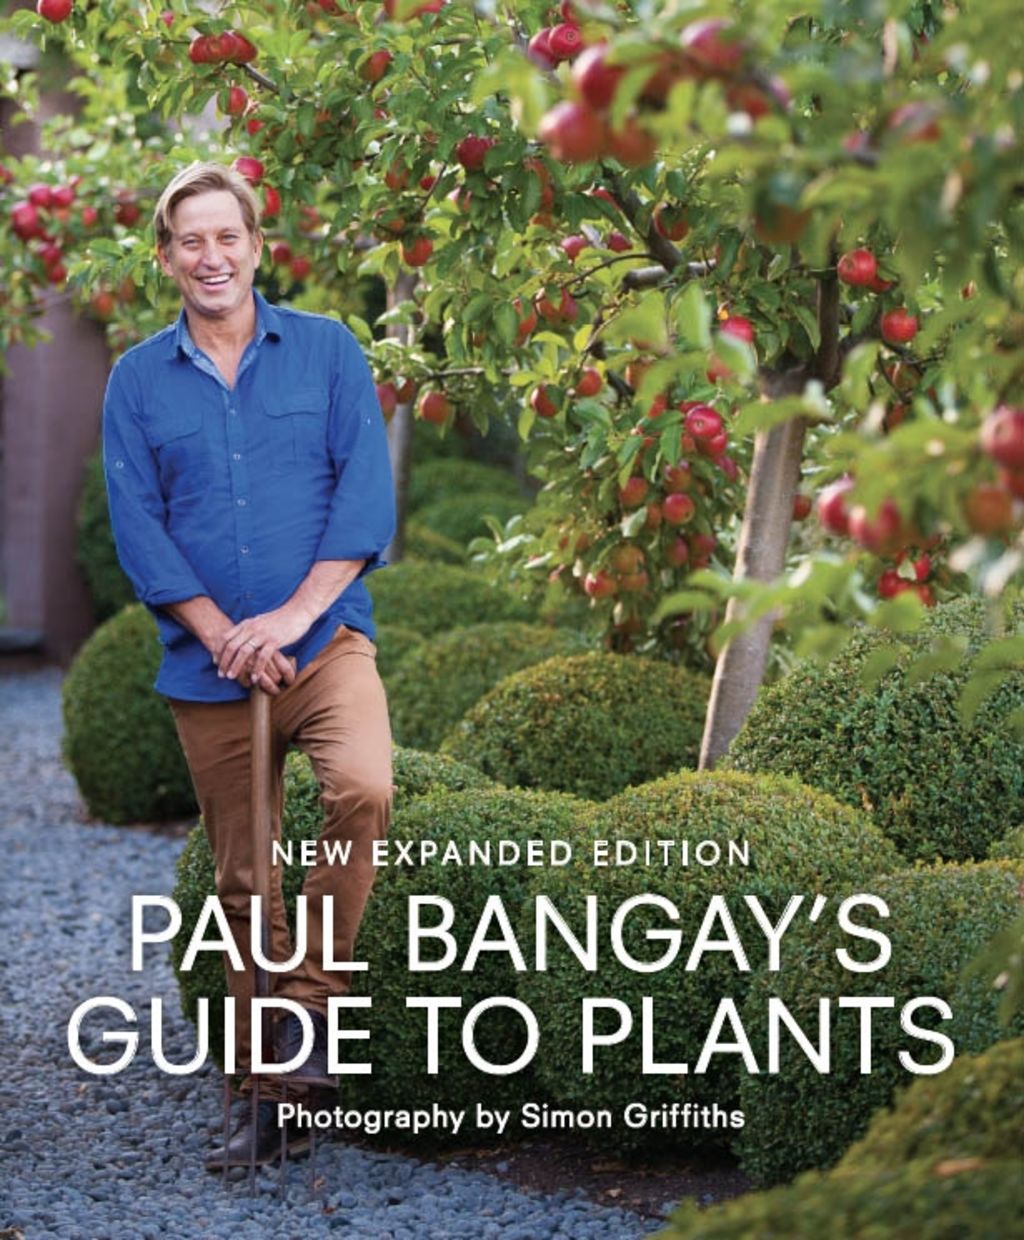 Paul Bangay's Guide to Plants. Photo: Penguin Books